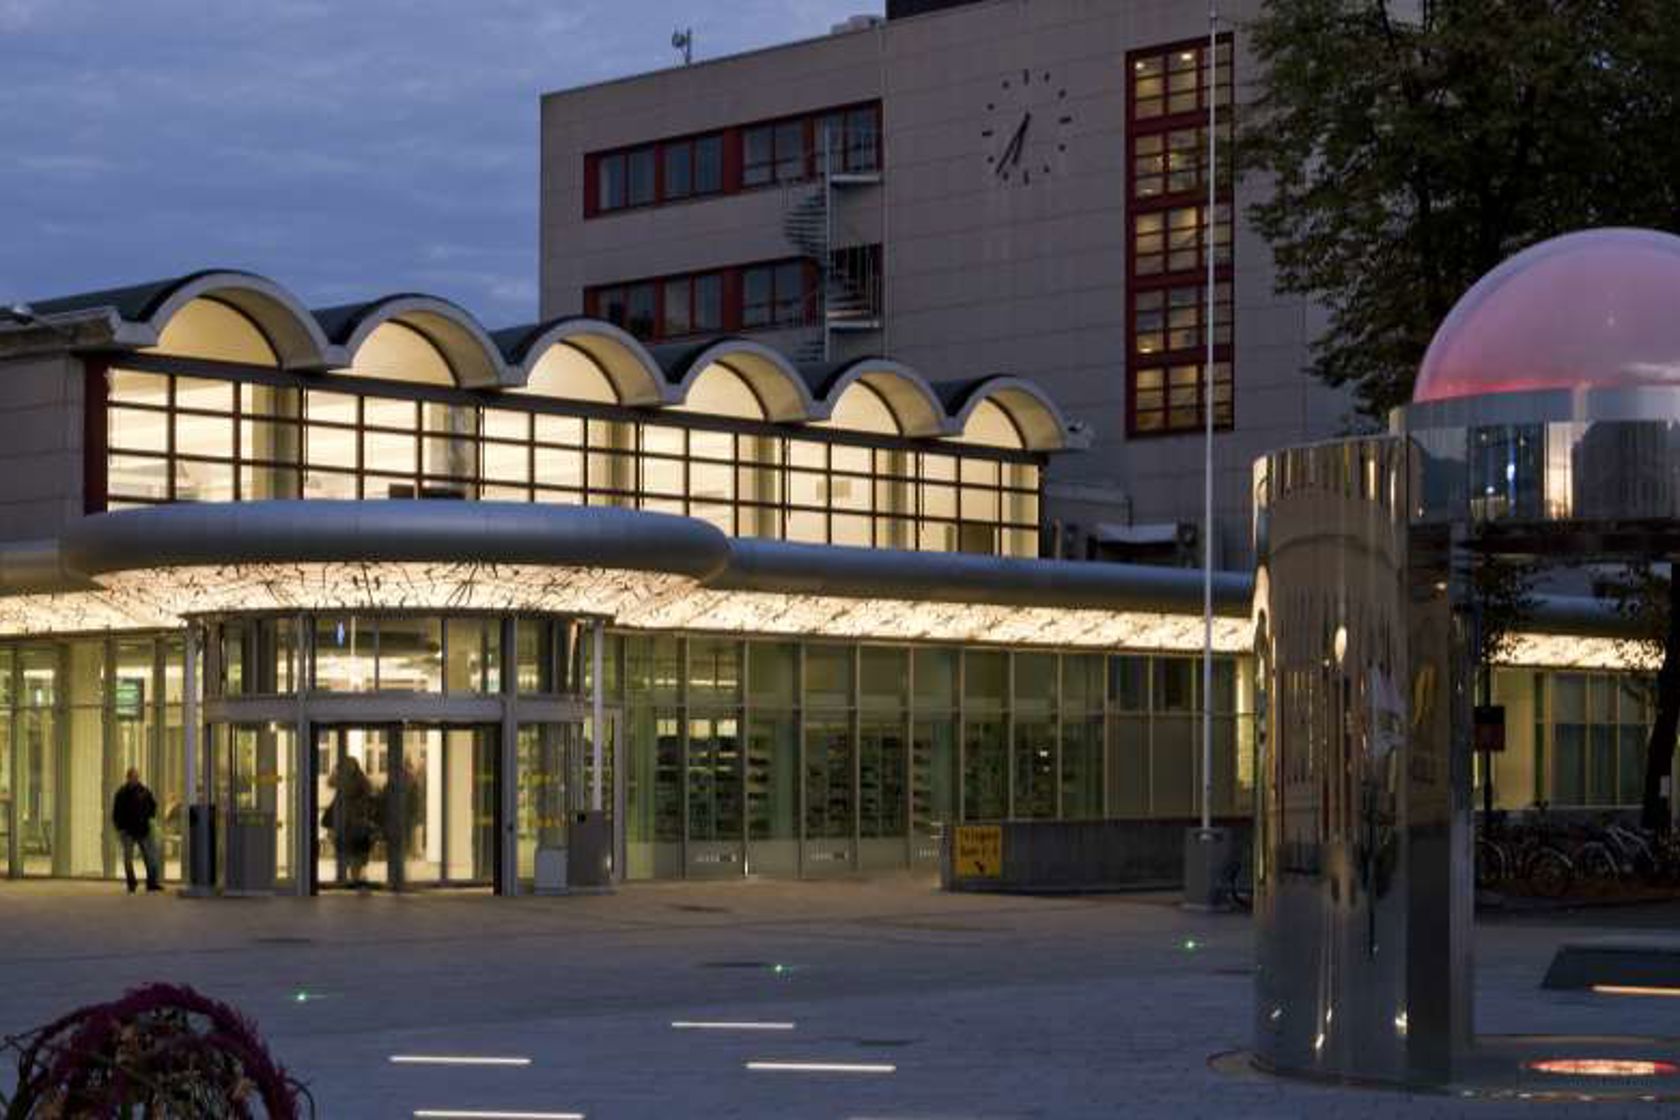 Exterior view of Drammen station